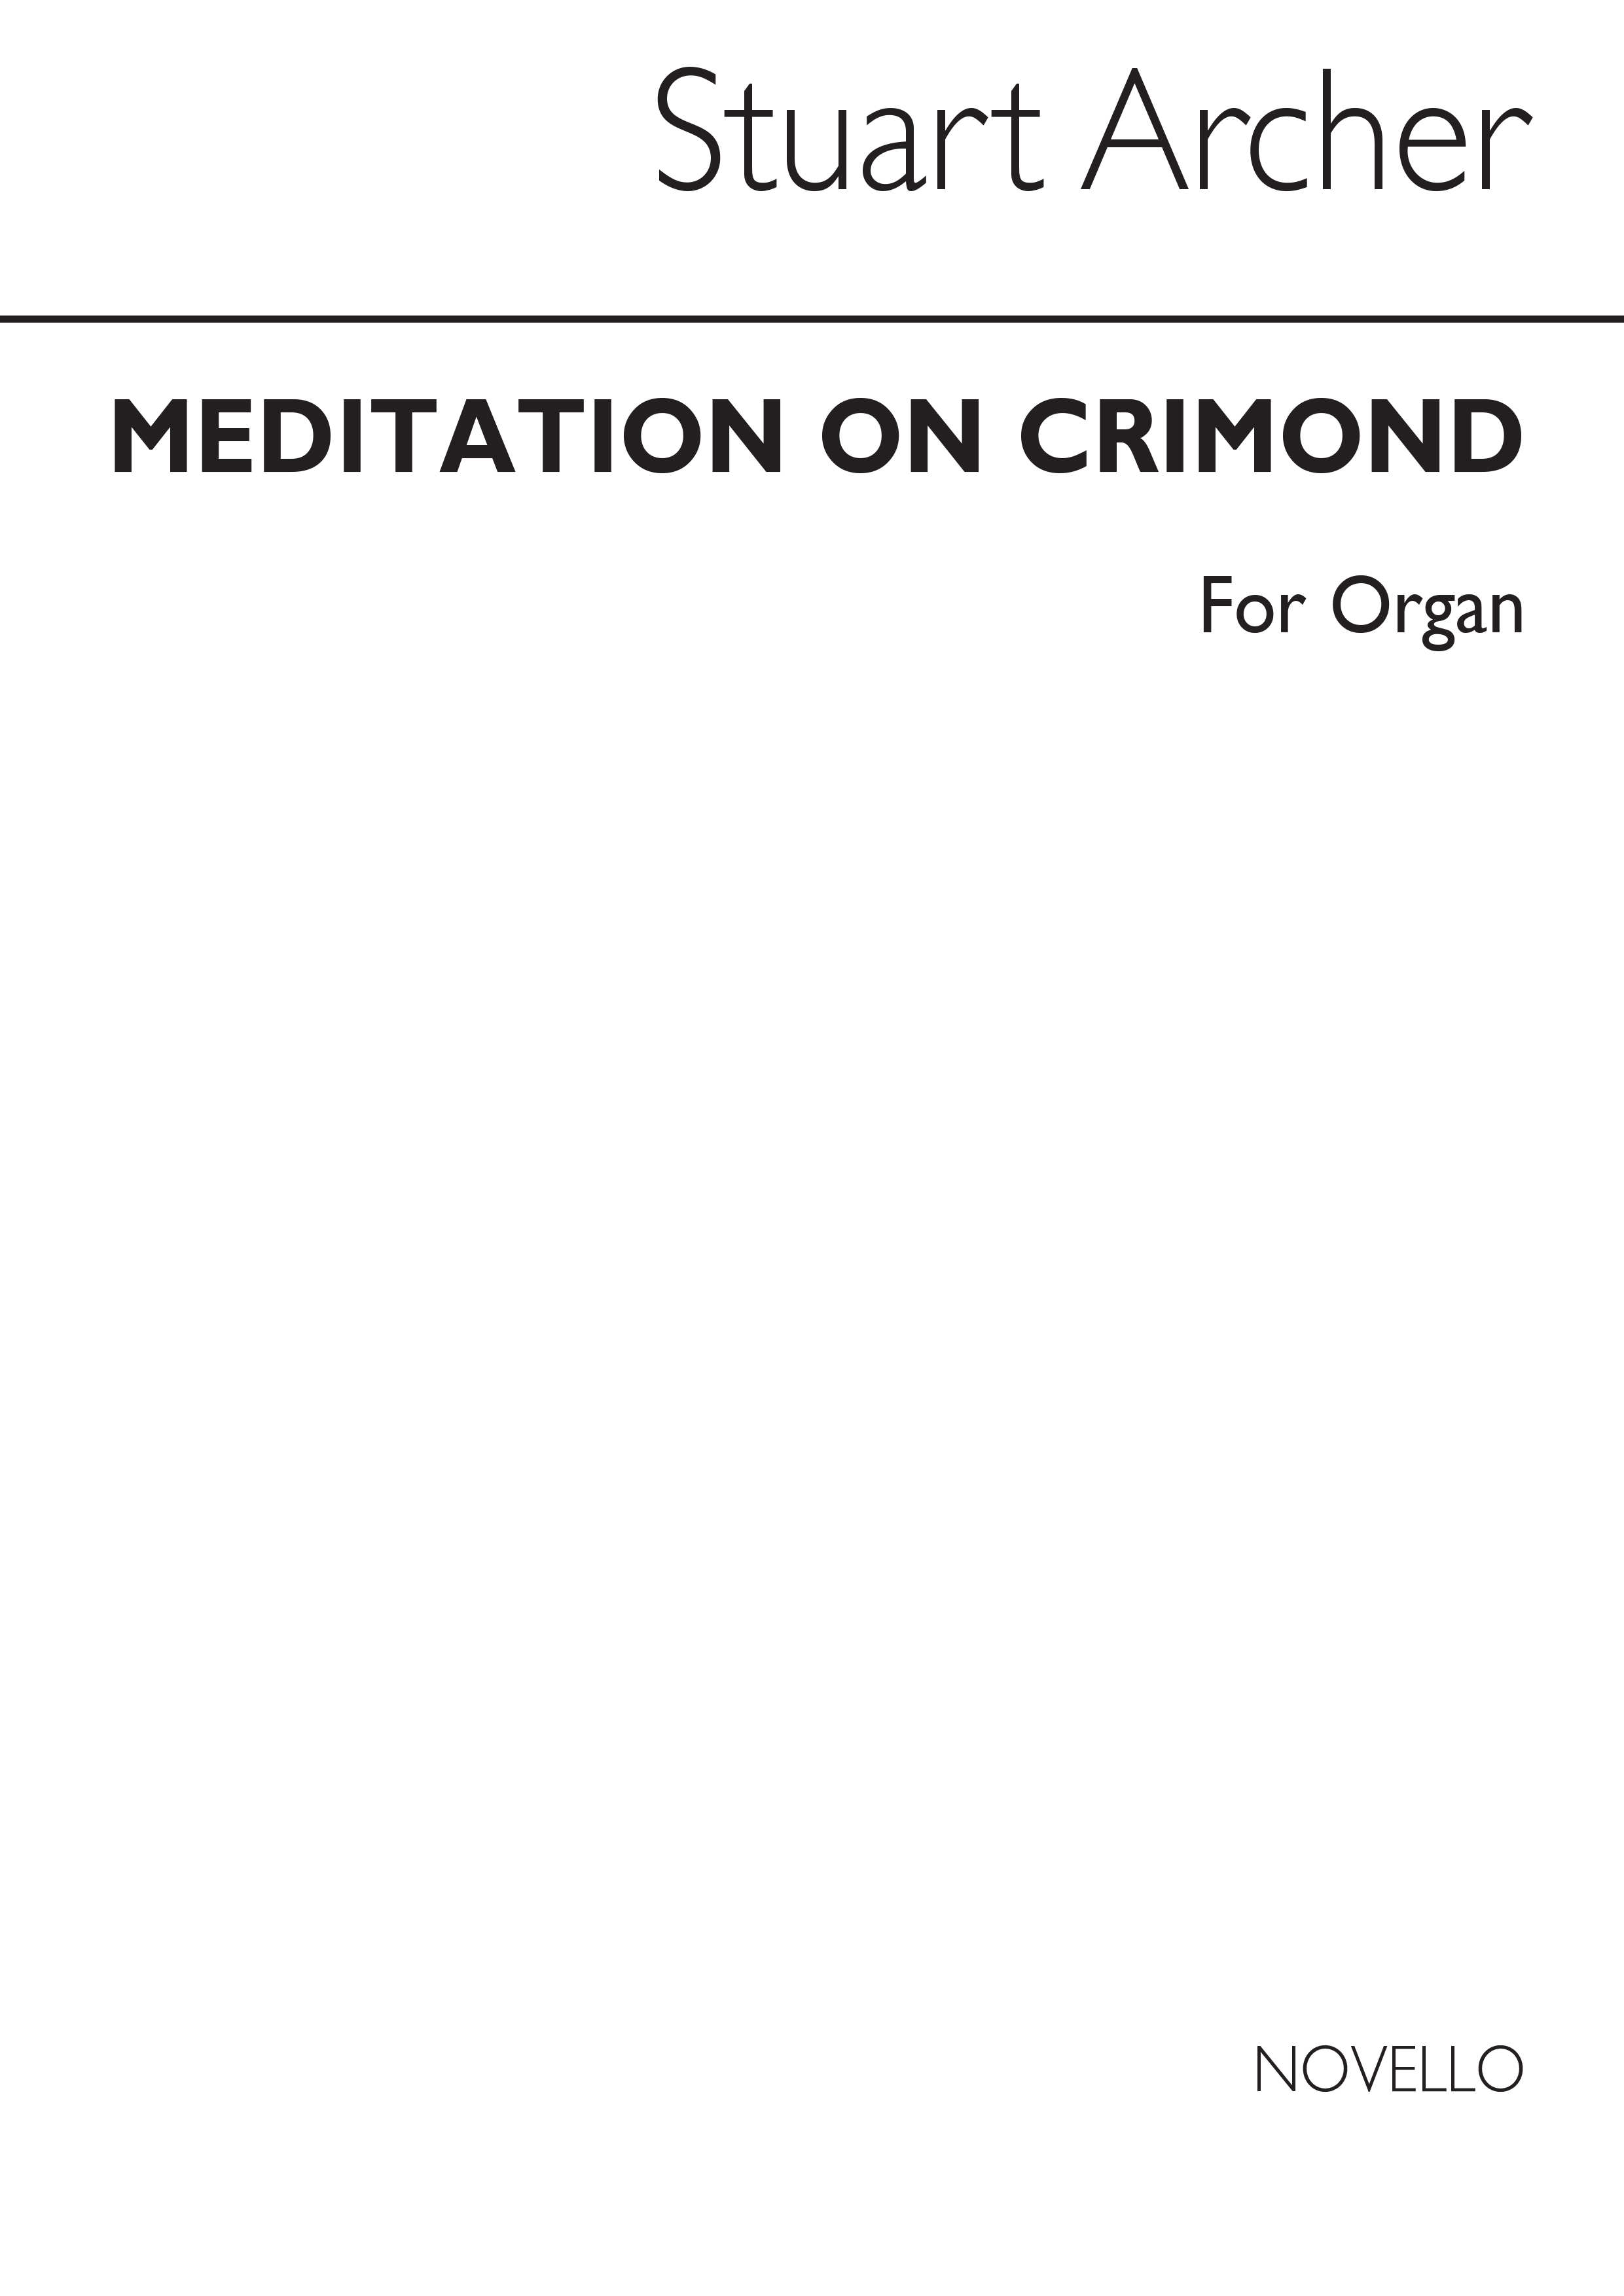 J. Stuart Archer: Meditation On Crimond Psalm 23 for Organ